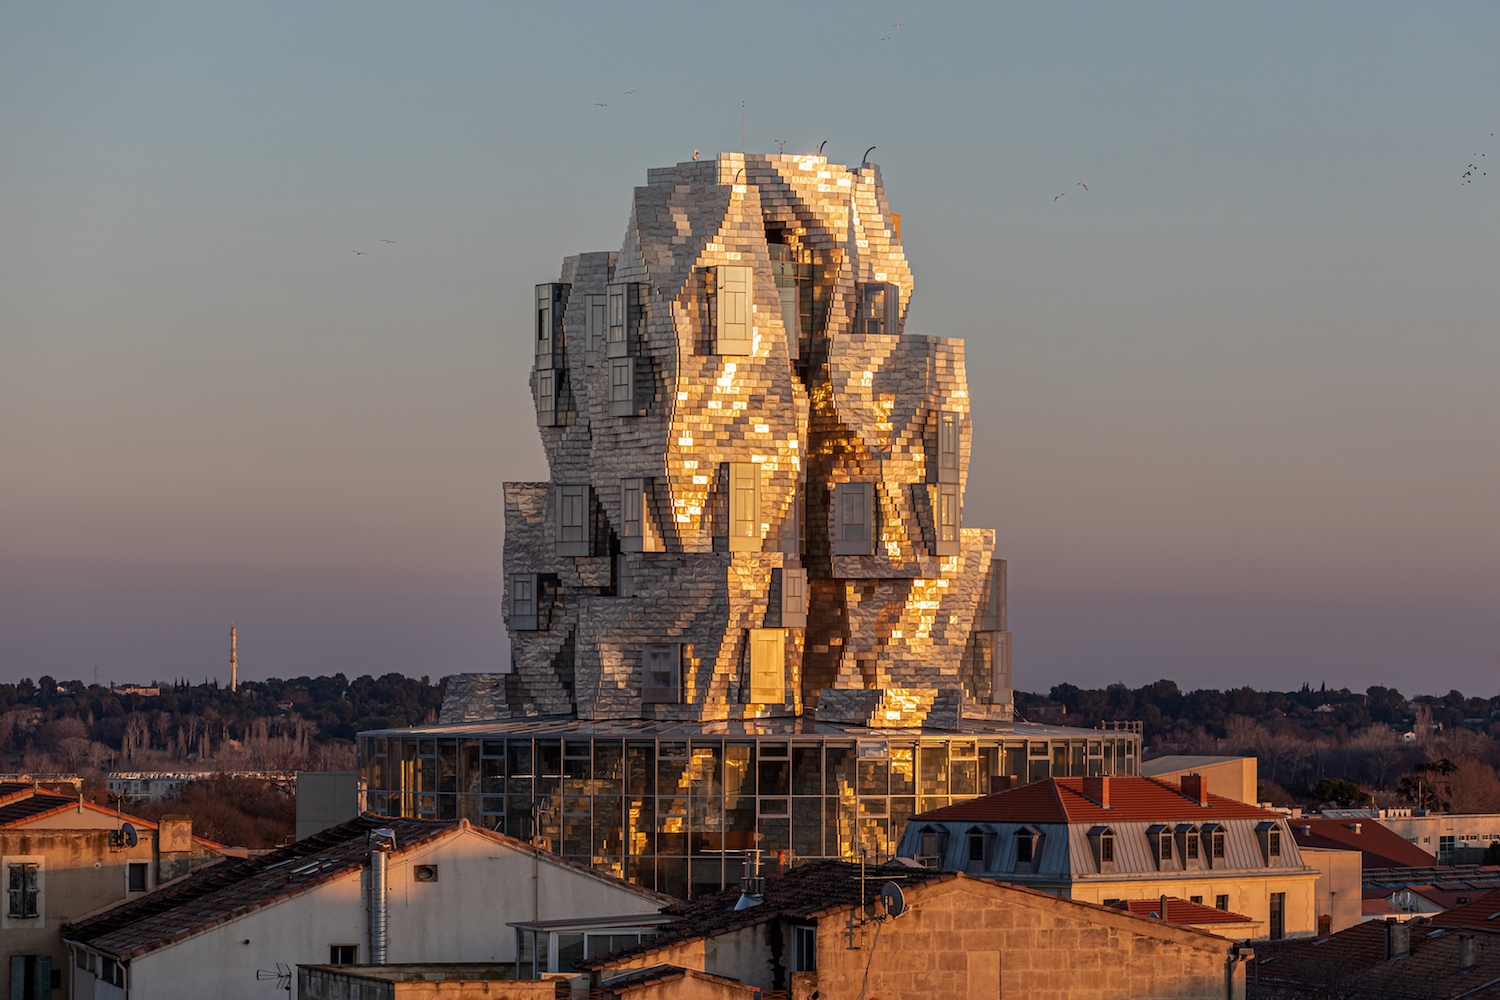 Frank Gehry, LUM Arles